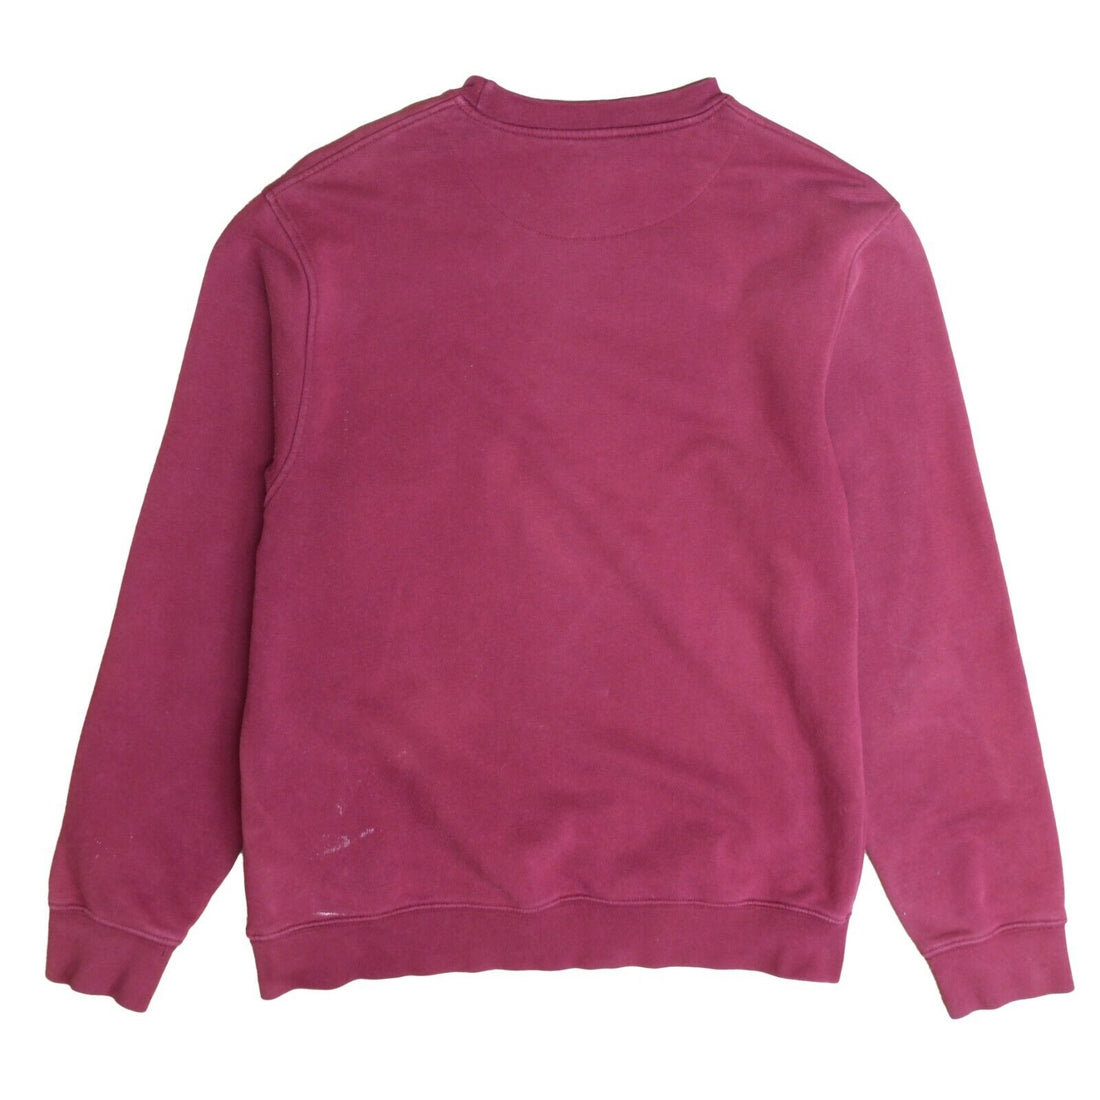 Vintage Nike Sweatshirt Crewneck Size Medium Red Embroidered Swoosh